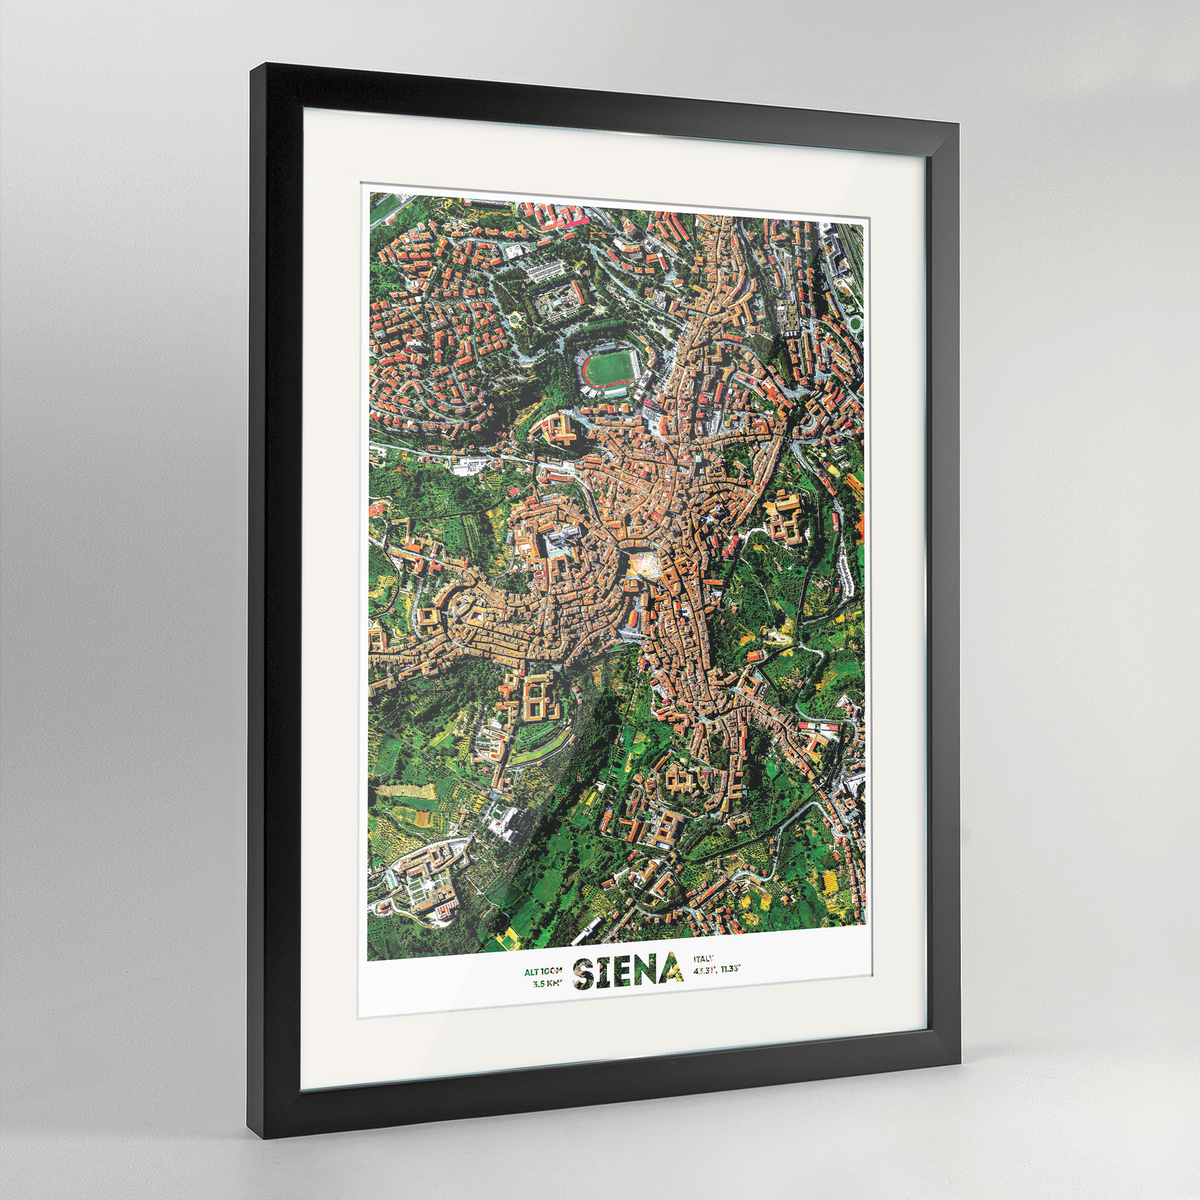 Siena Earth Photography Art Print - Framed